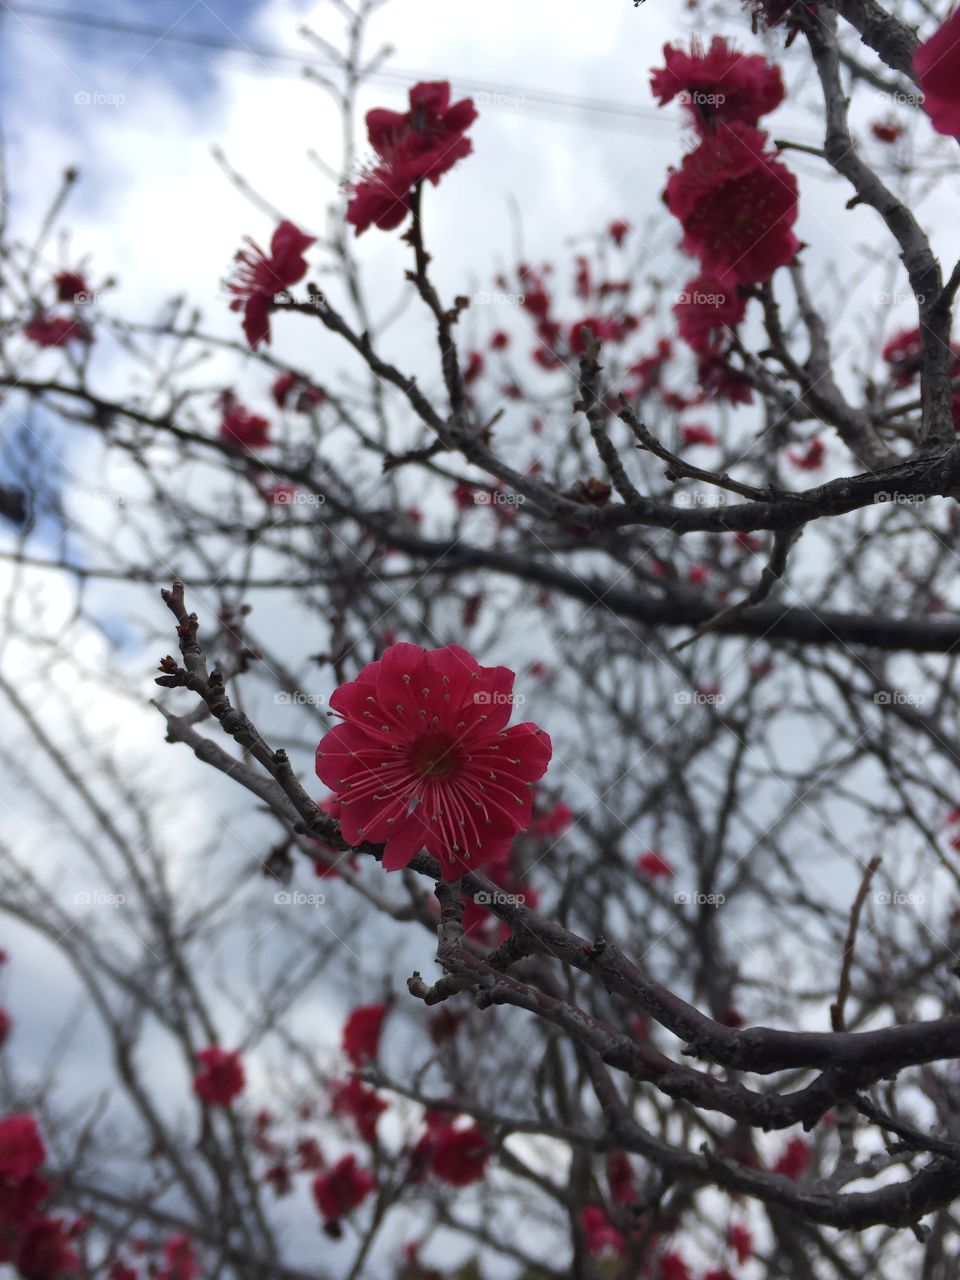 Beginning of cherry blossom season